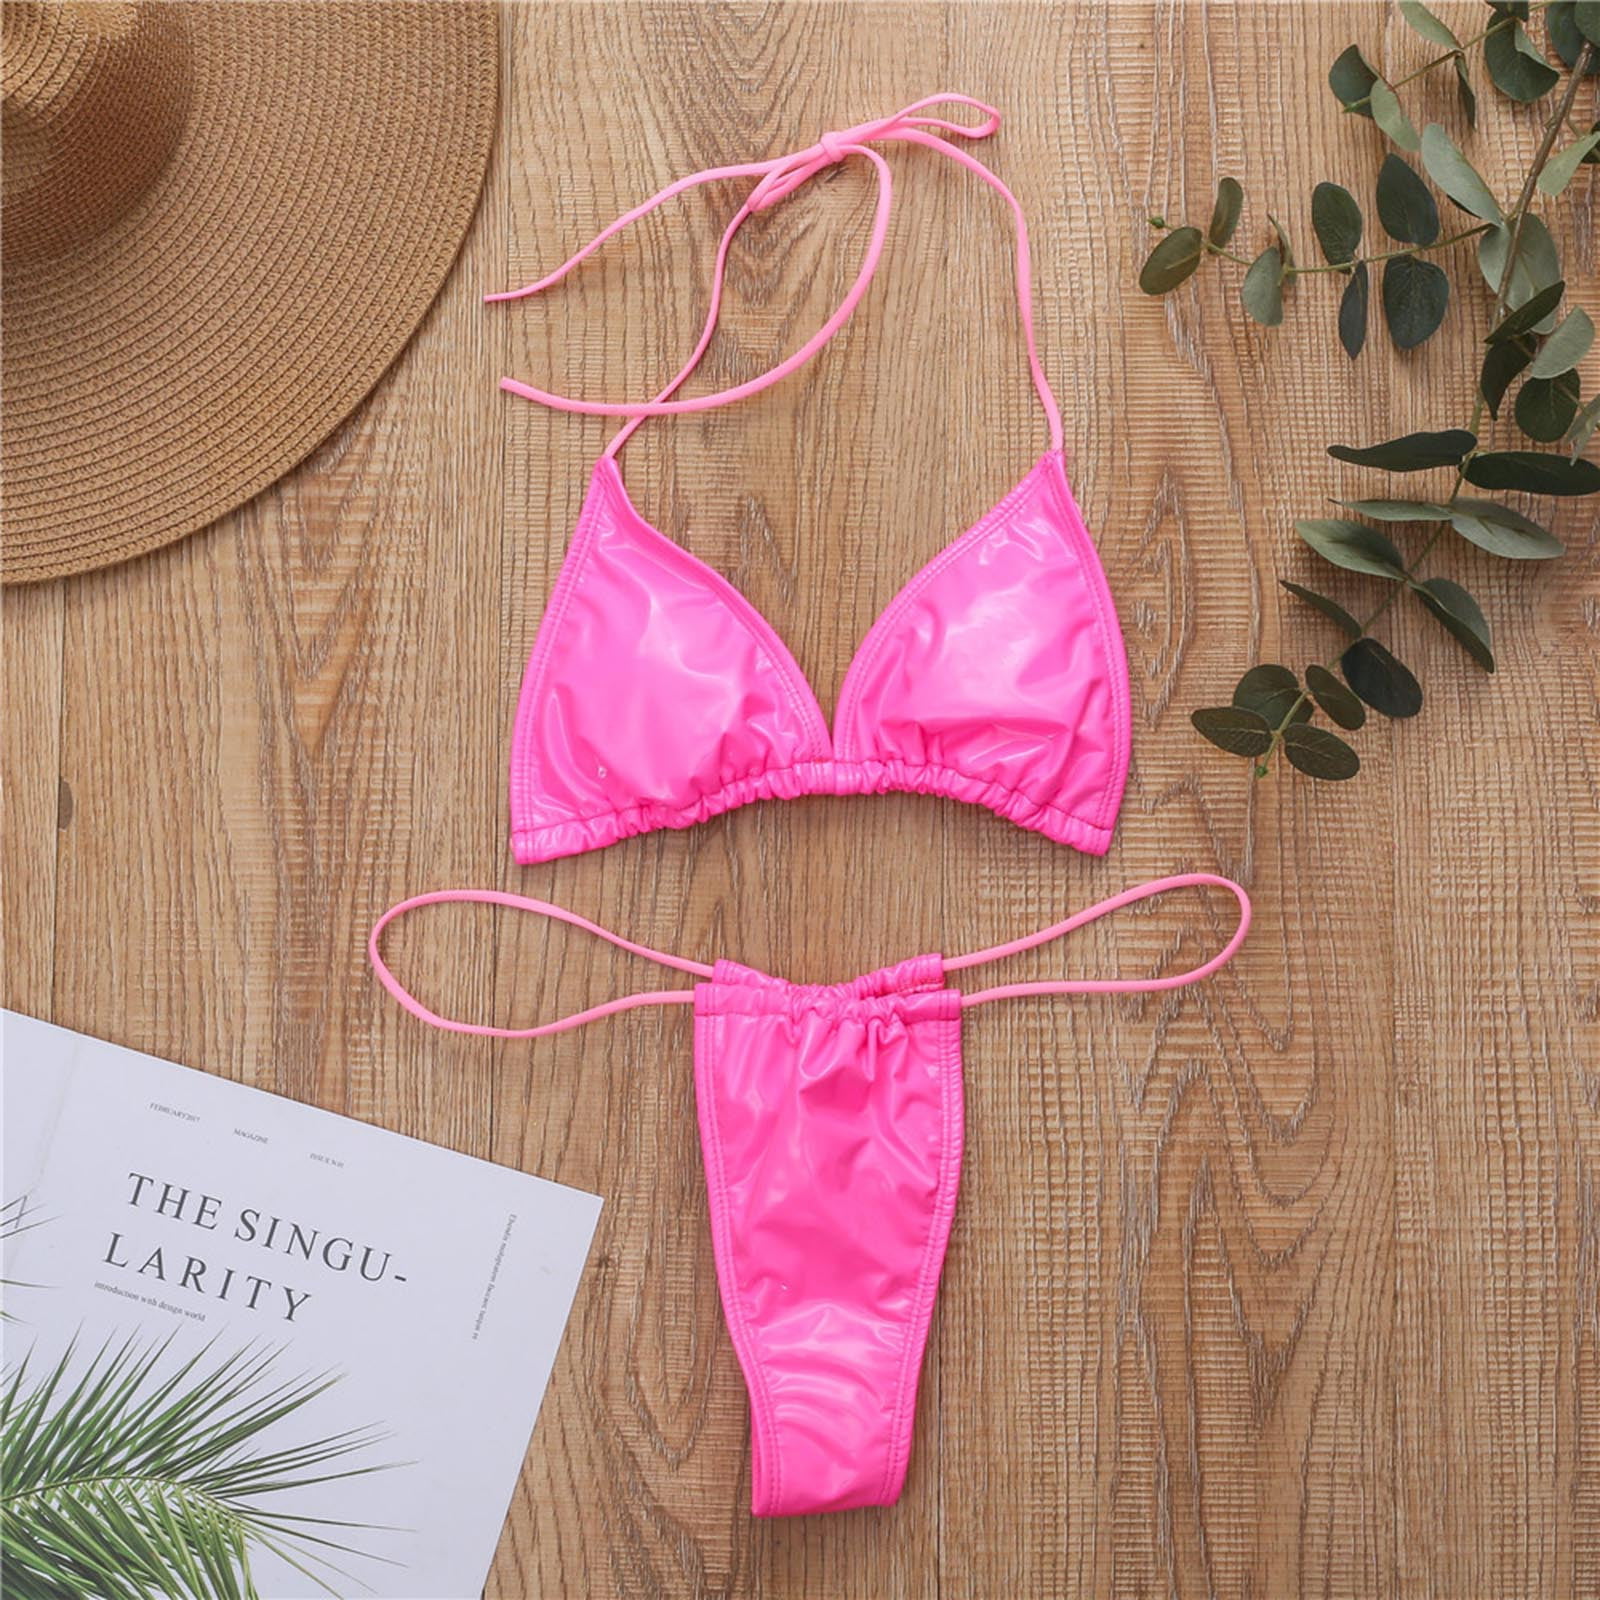 ZQGJB Thong Bikini Clear Straps Cheeky Brazilian G-String Micro Thongs  Bikinis Swimsuit for Women Sexy No Tan Line Bathing Suit(Pink,L)